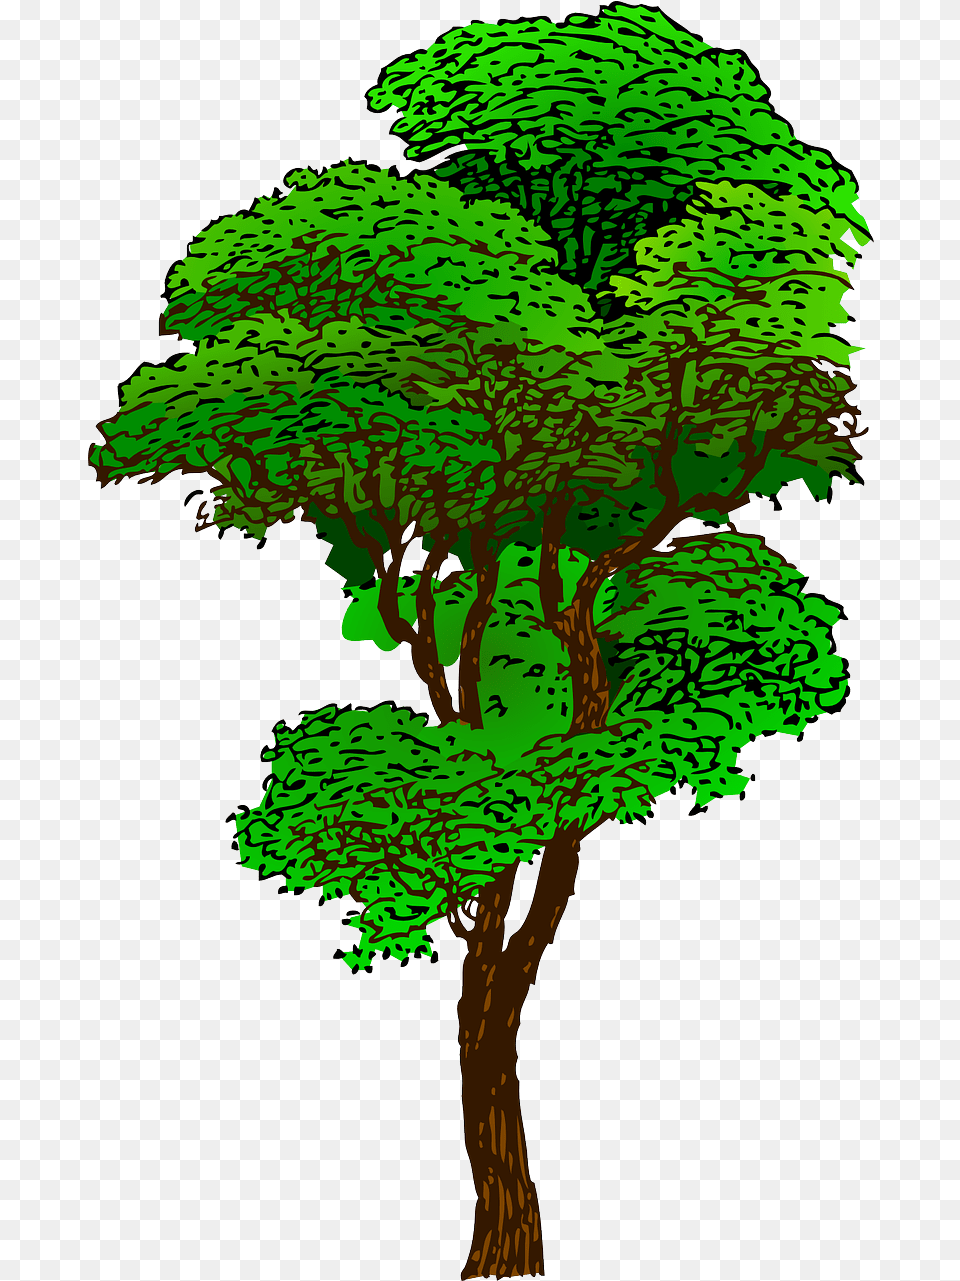 Tropical Rainforest Tree Clip Art Rainforest Tree Clipart, Plant, Tree Trunk, Oak, Sycamore Free Transparent Png